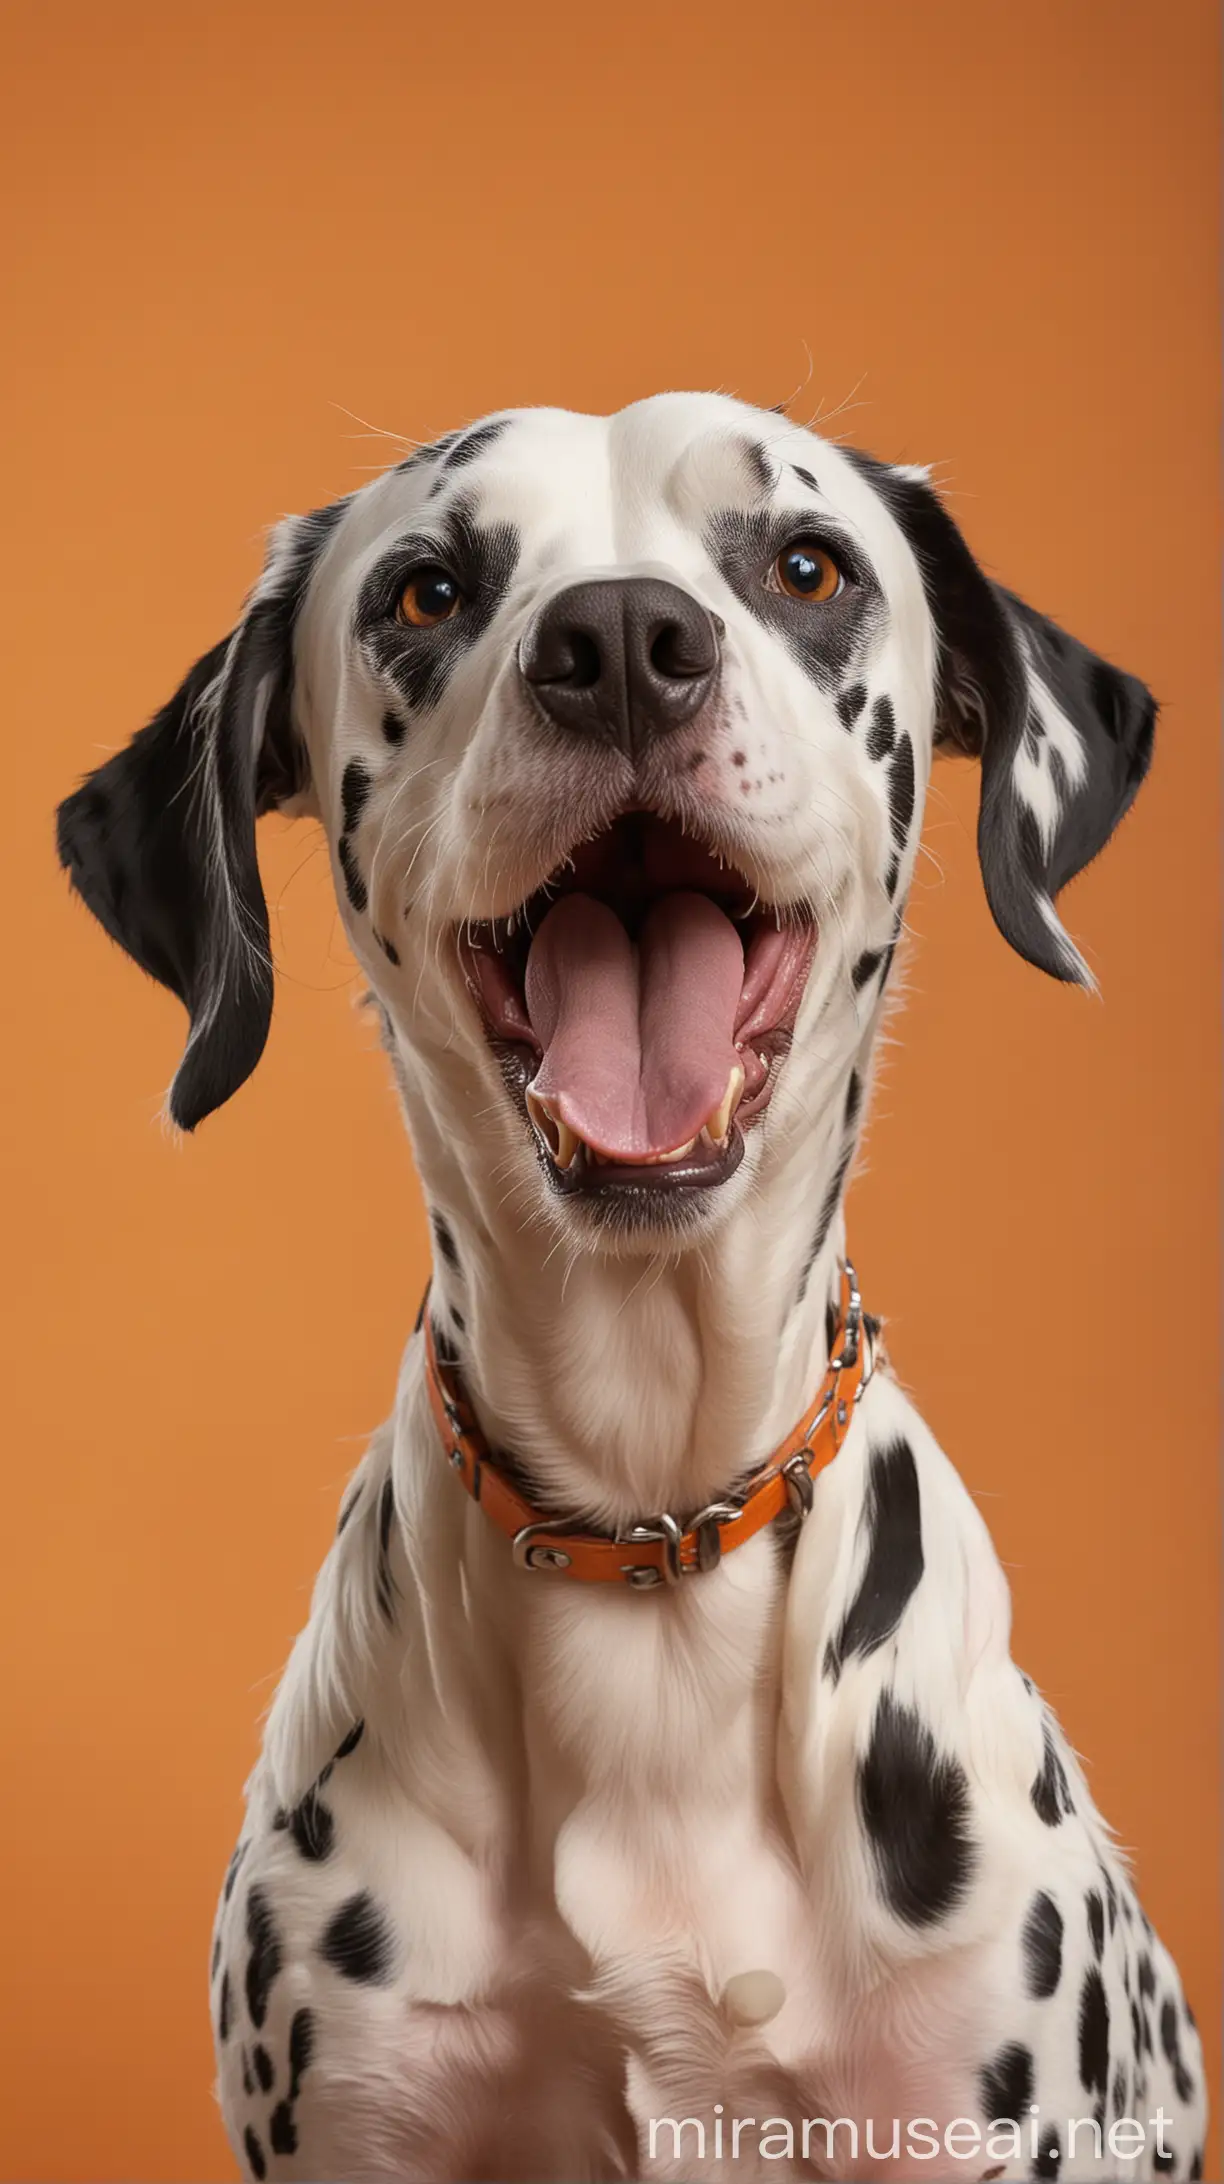 Dalmatian Dog Portrait with Open Mouth on Orange Background